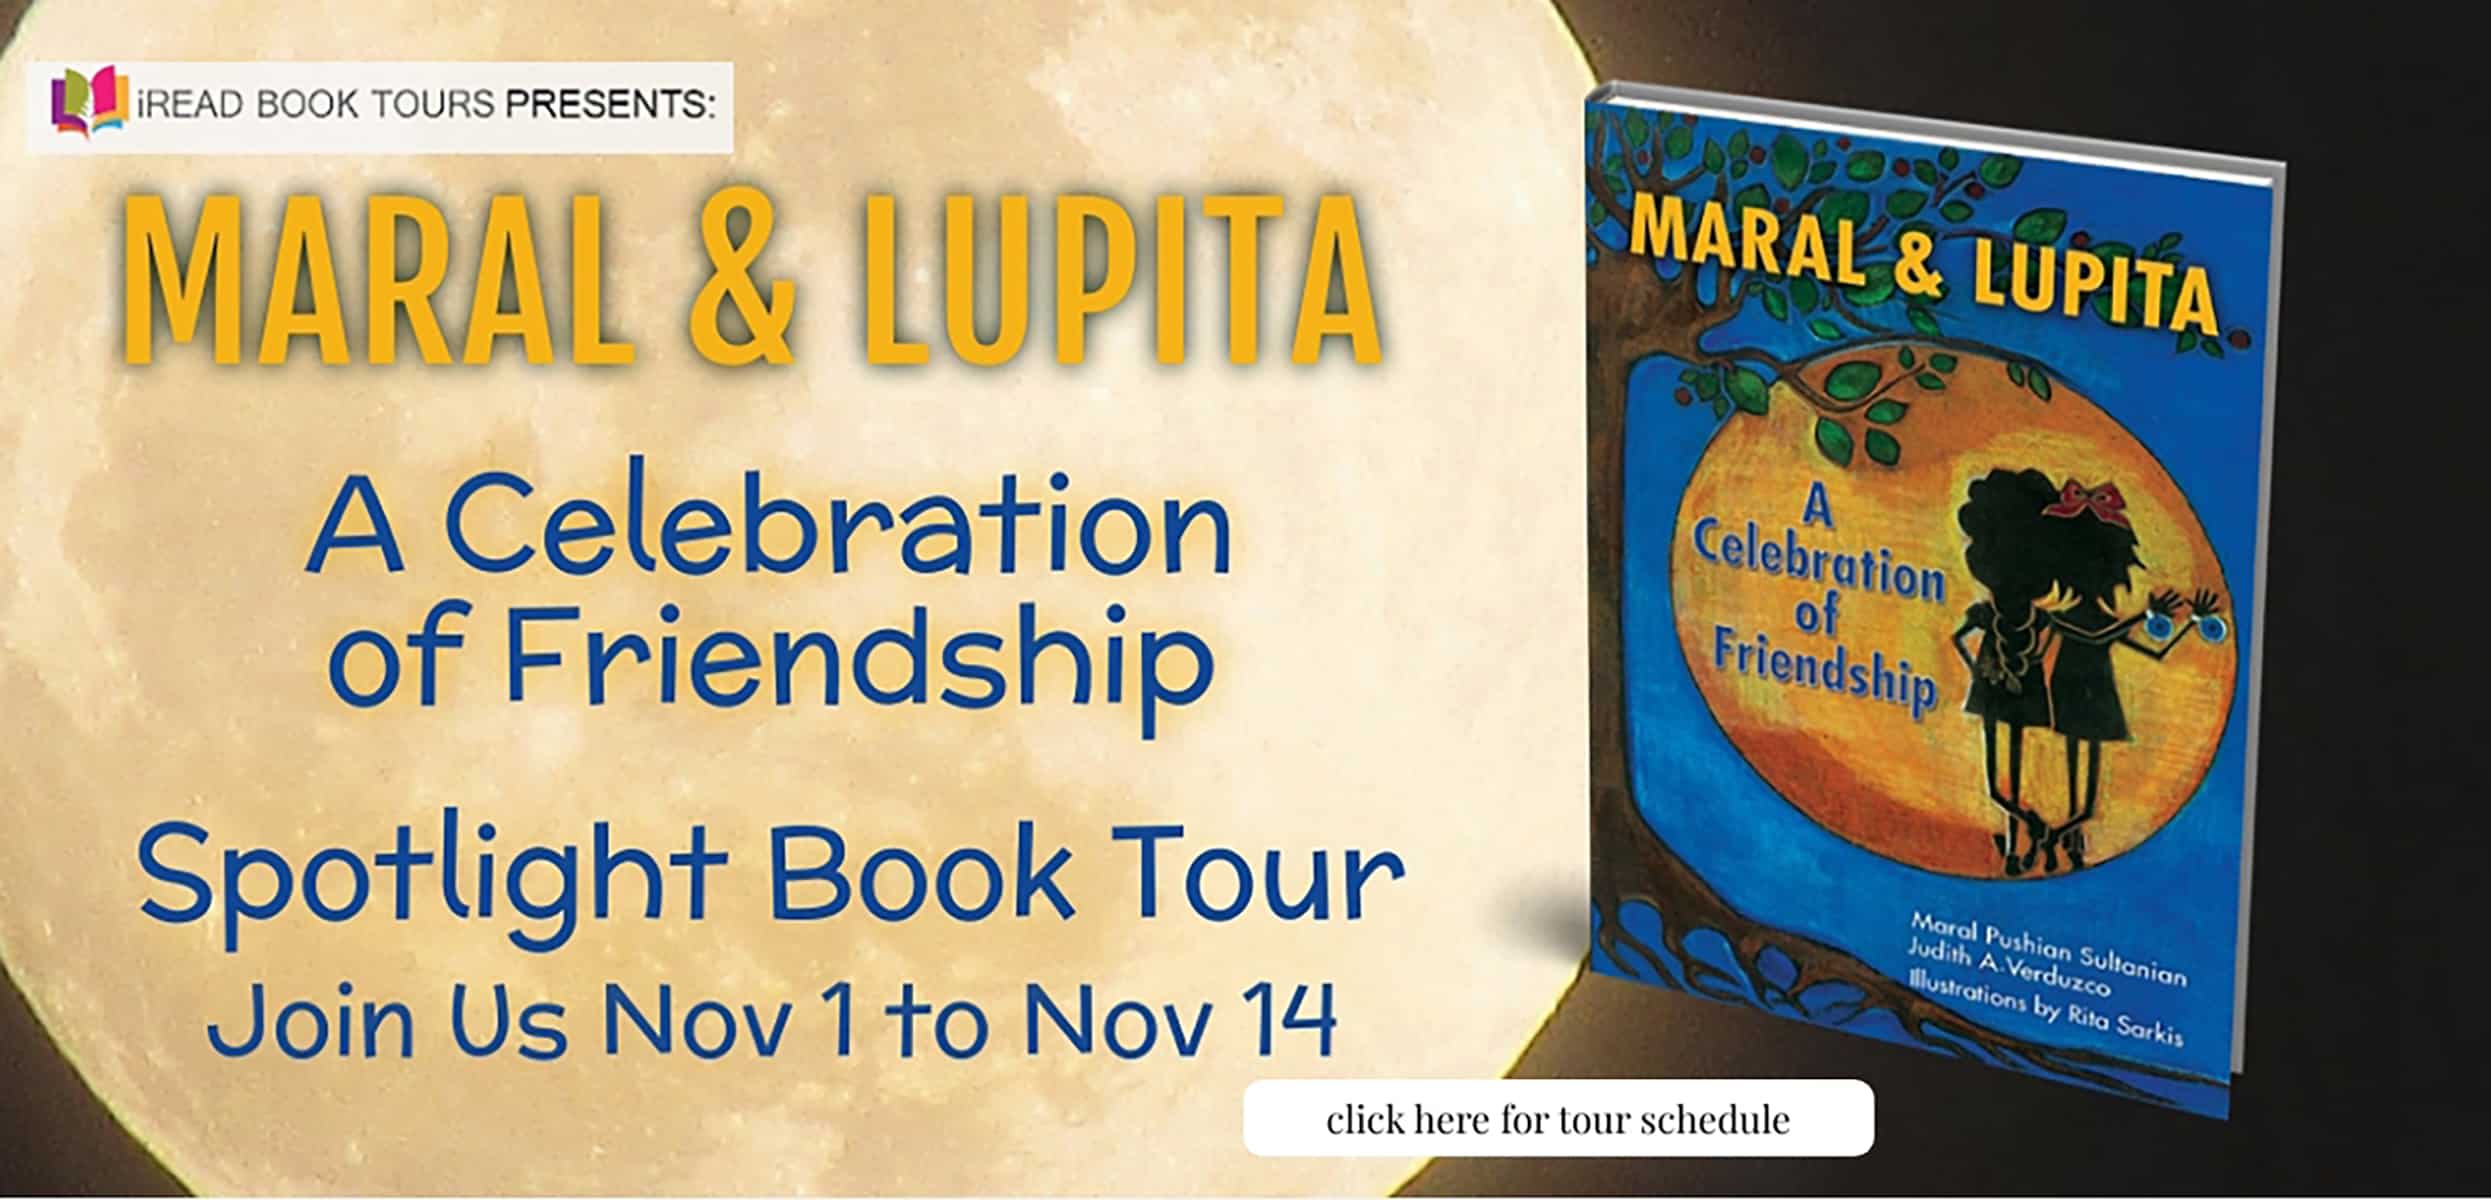 Maral & Lupita - A Celebration of Friendship by Judith Verduzco & Maral Pushian Sultanian | Spotlight, Middle-Grade Fiction, Release Date Nov. 1, 2022